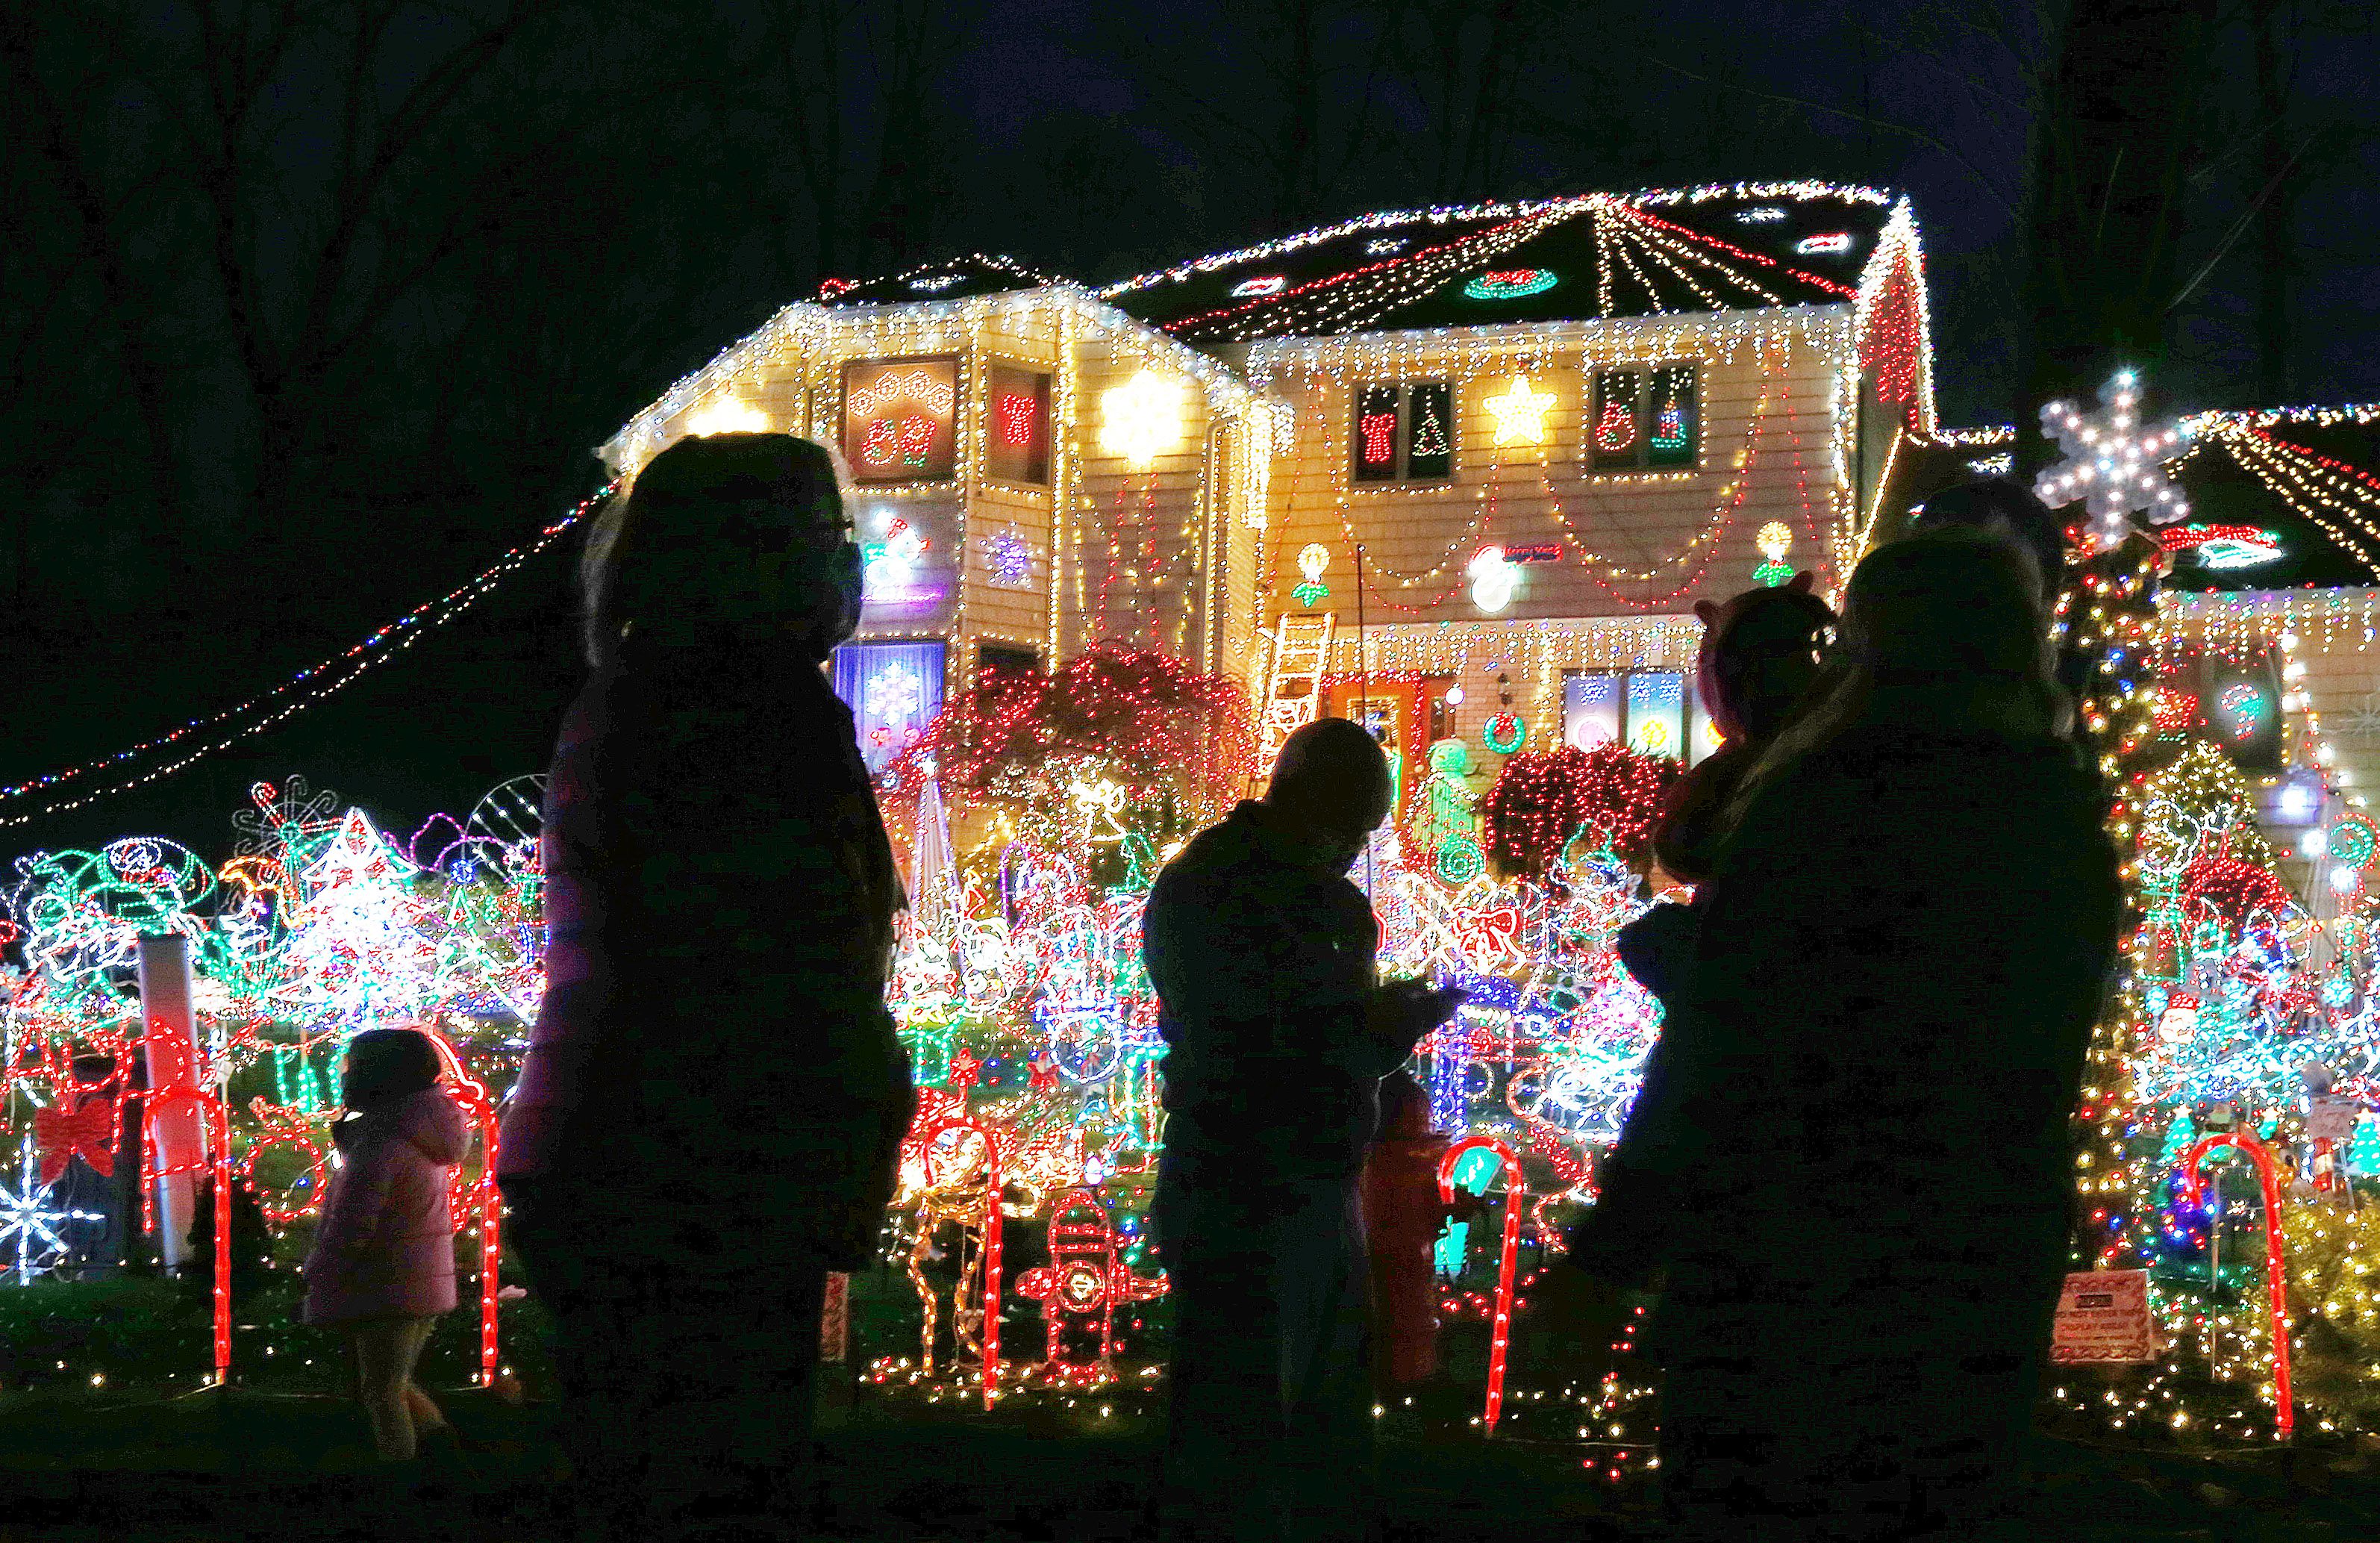 Christmas lights give joyful glow in Lyndhurst NJ